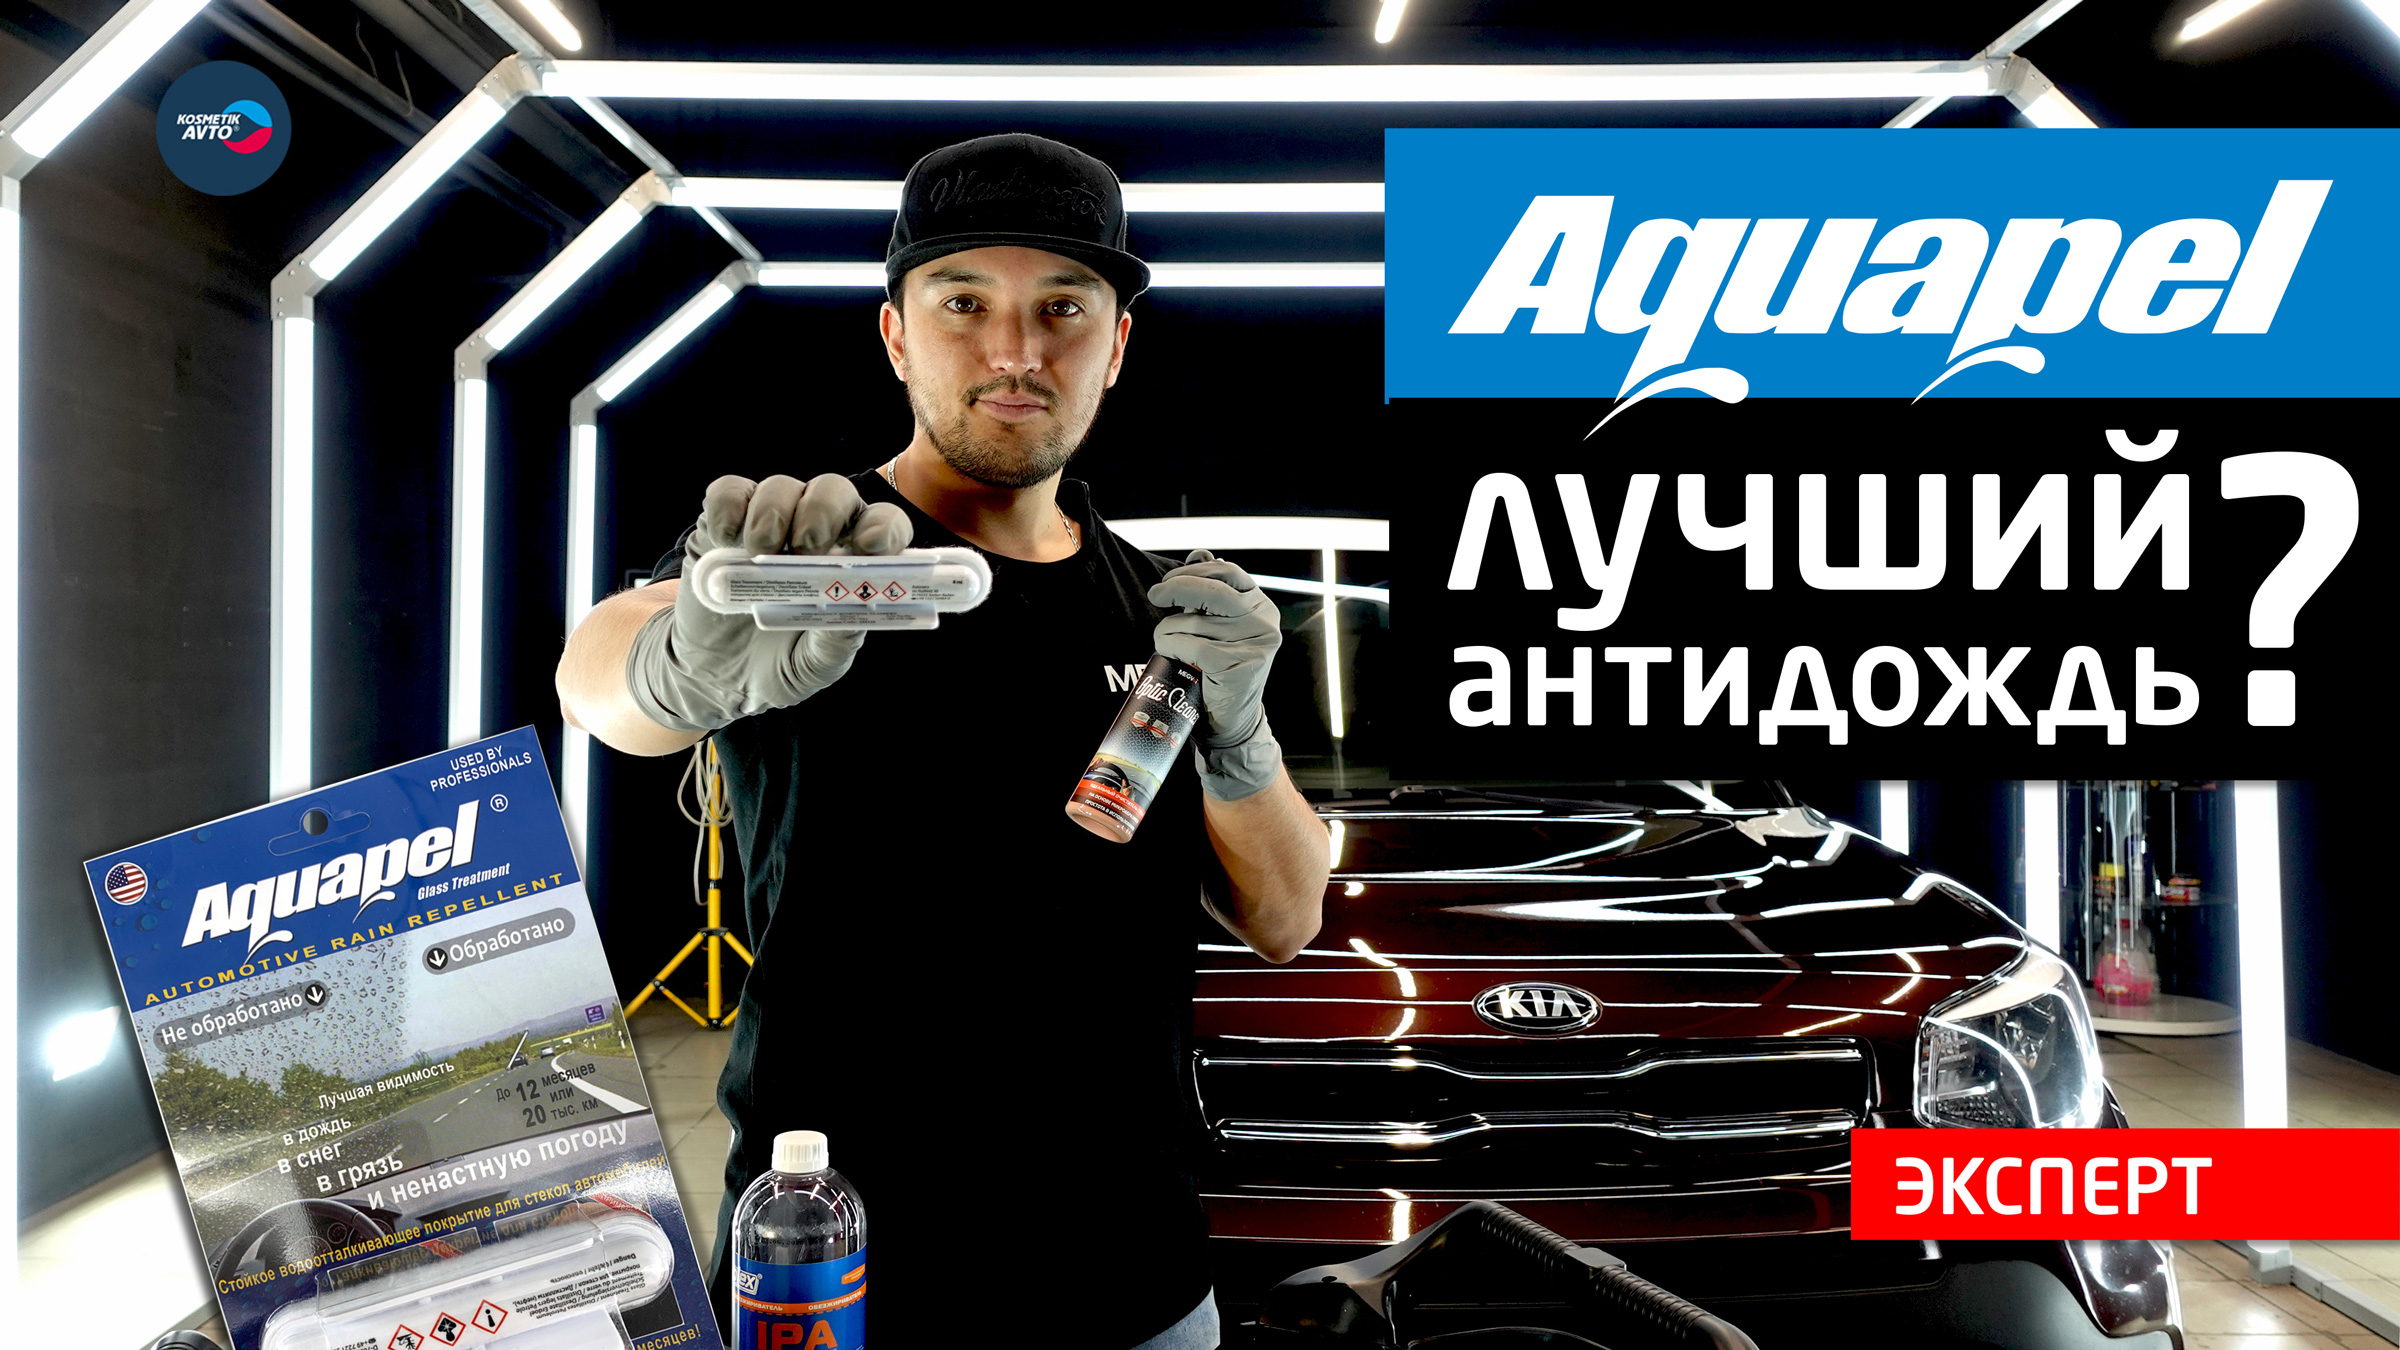 Aquapel Glass Treatment ► как правильно нанести!